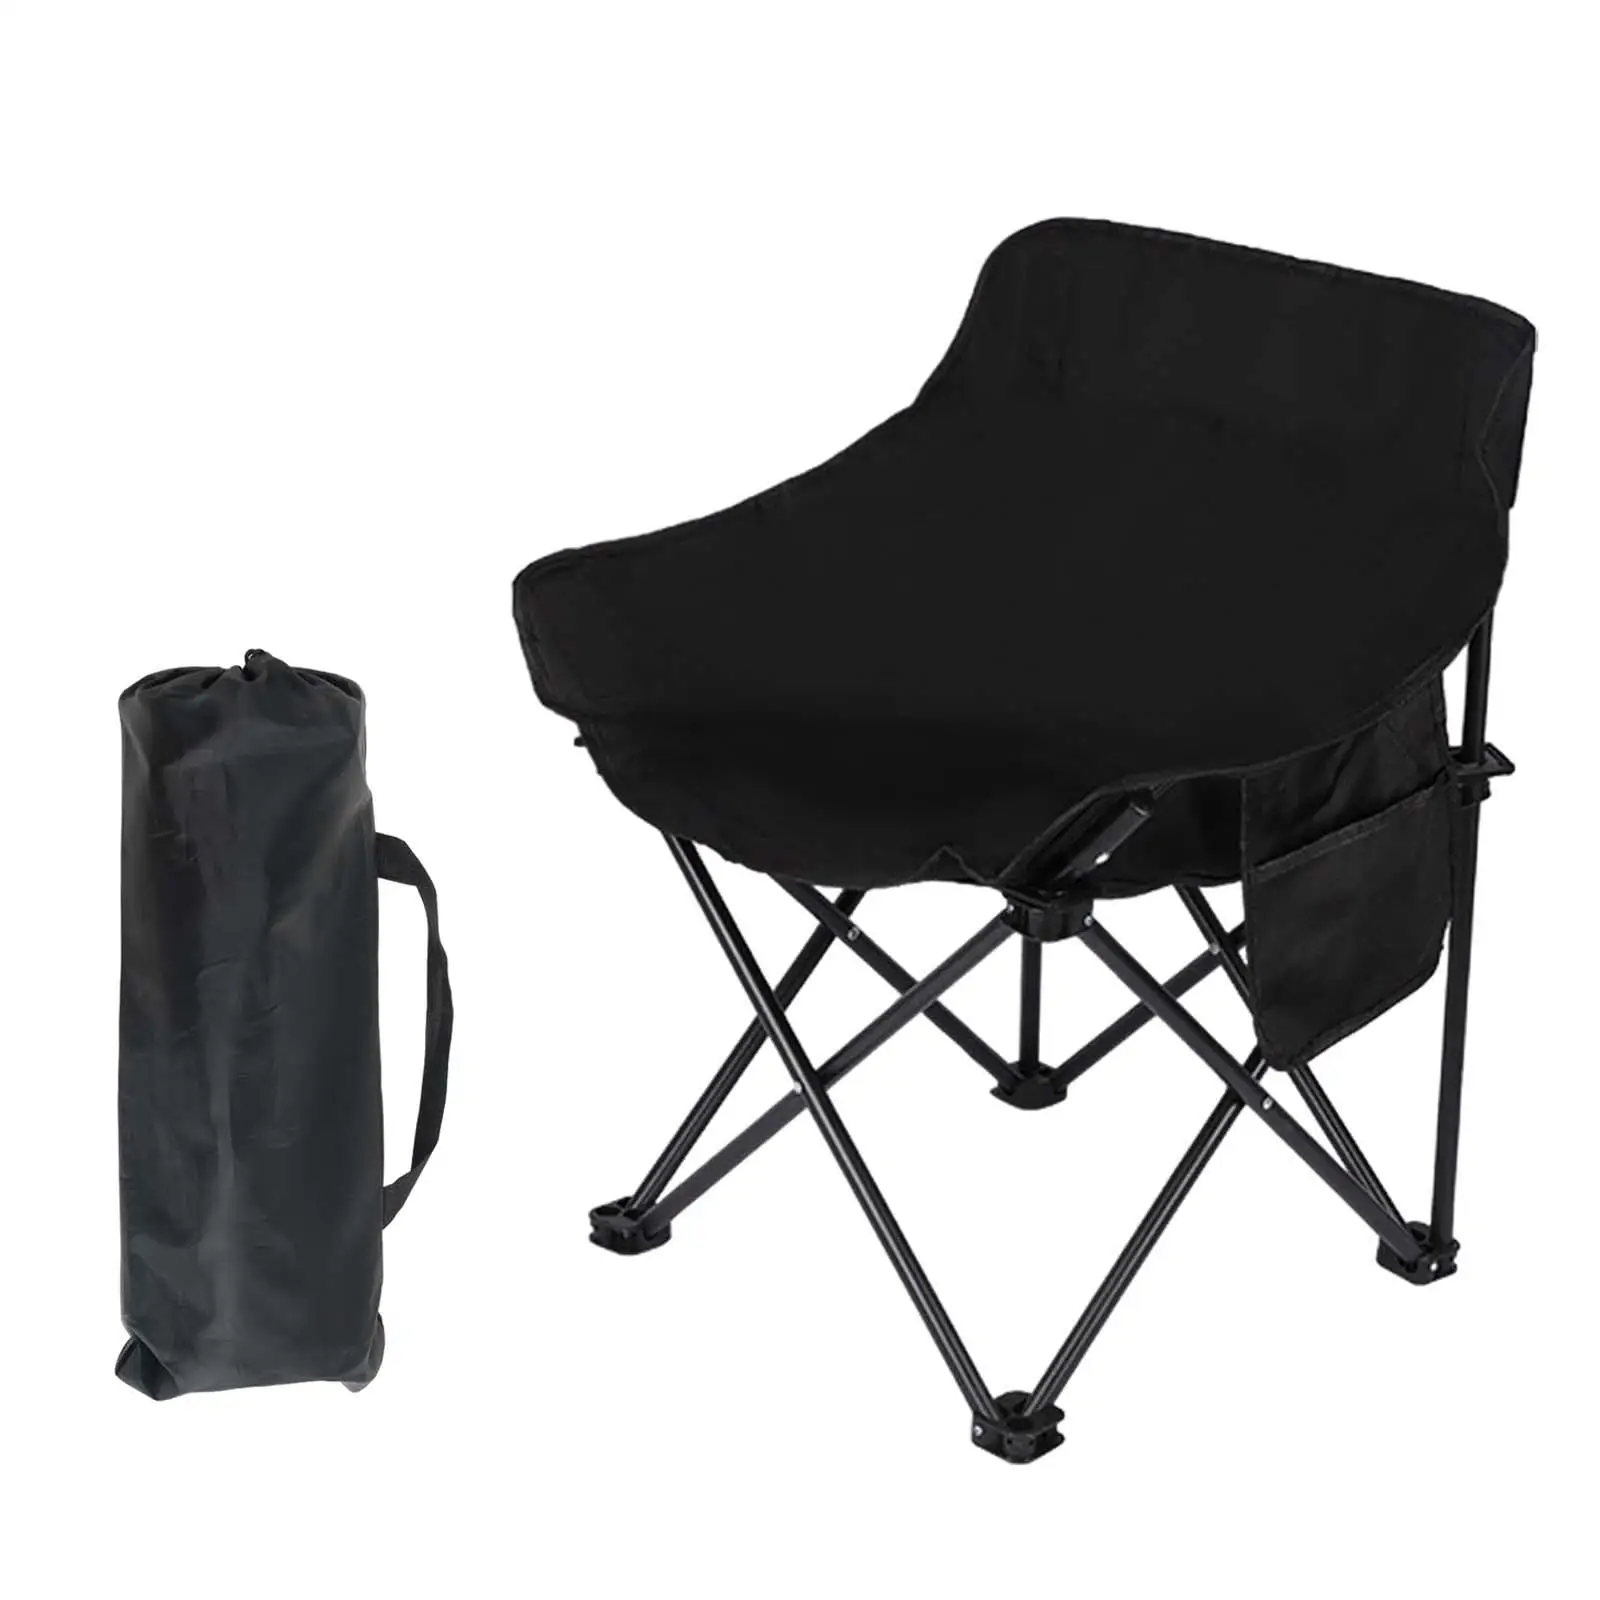 Folding Camping Chair Durable Portable Folding Chair for Hiking Picnics Yard